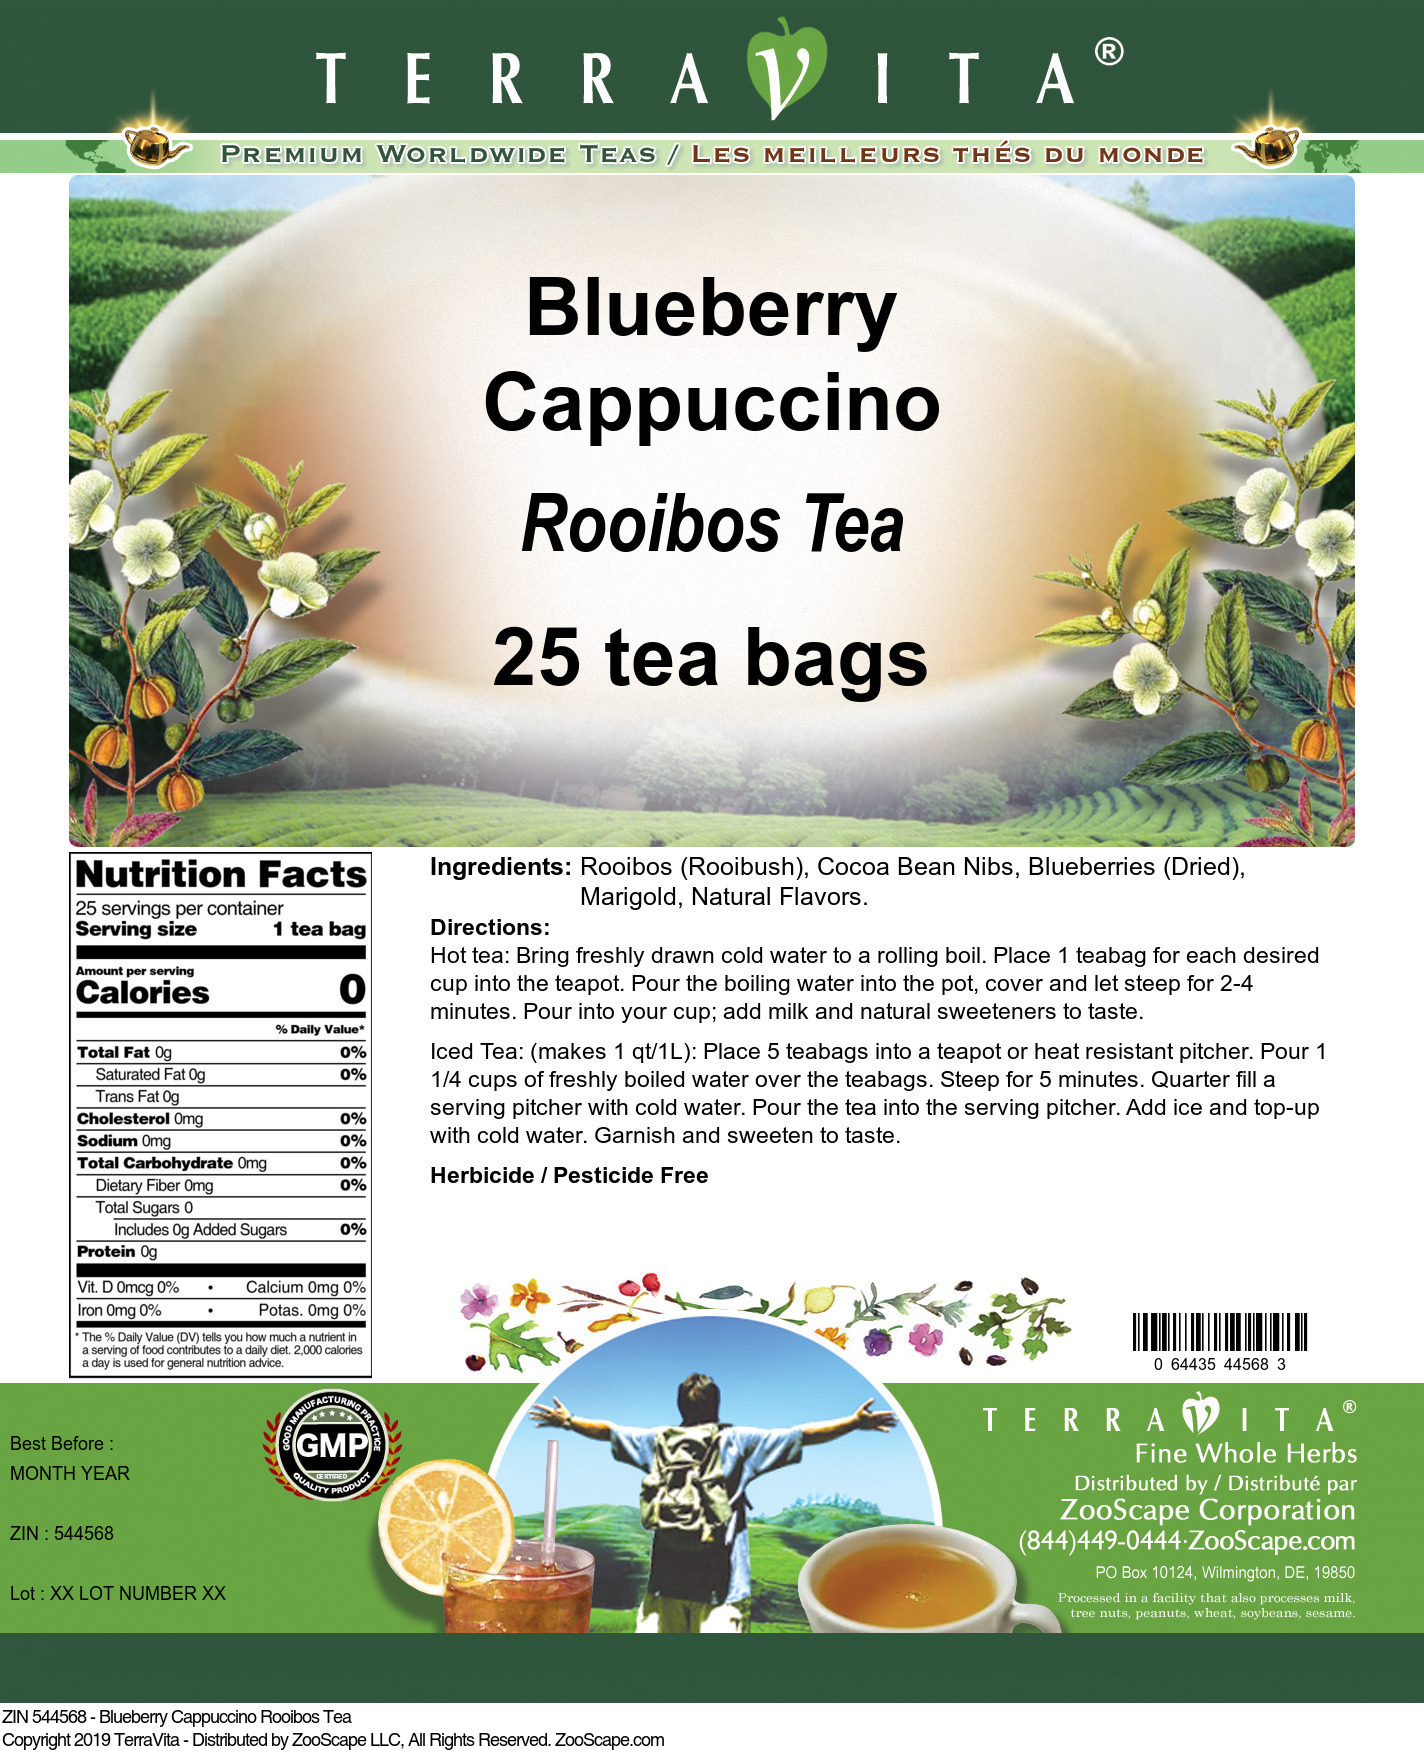 Blueberry Cappuccino Rooibos Tea - Label